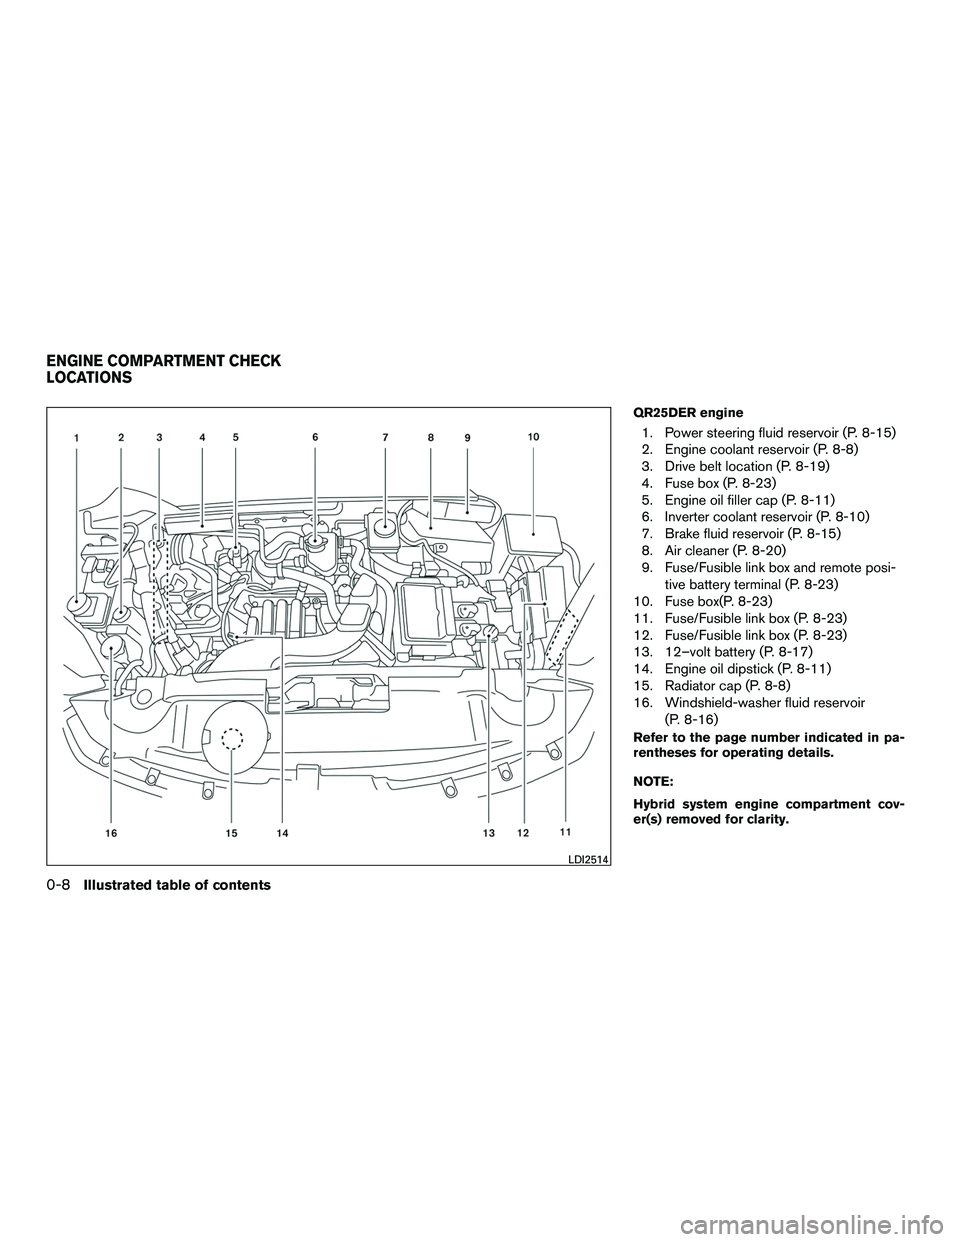 INFINITI QX60-HYBRID 2016  Owners Manual QR25DER engine
1. Power steering fluid reservoir (P. 8-15)
2. Engine coolant reservoir (P. 8-8)
3. Drive belt location (P. 8-19)
4. Fuse box (P. 8-23)
5. Engine oil filler cap (P. 8-11)
6. Inverter co